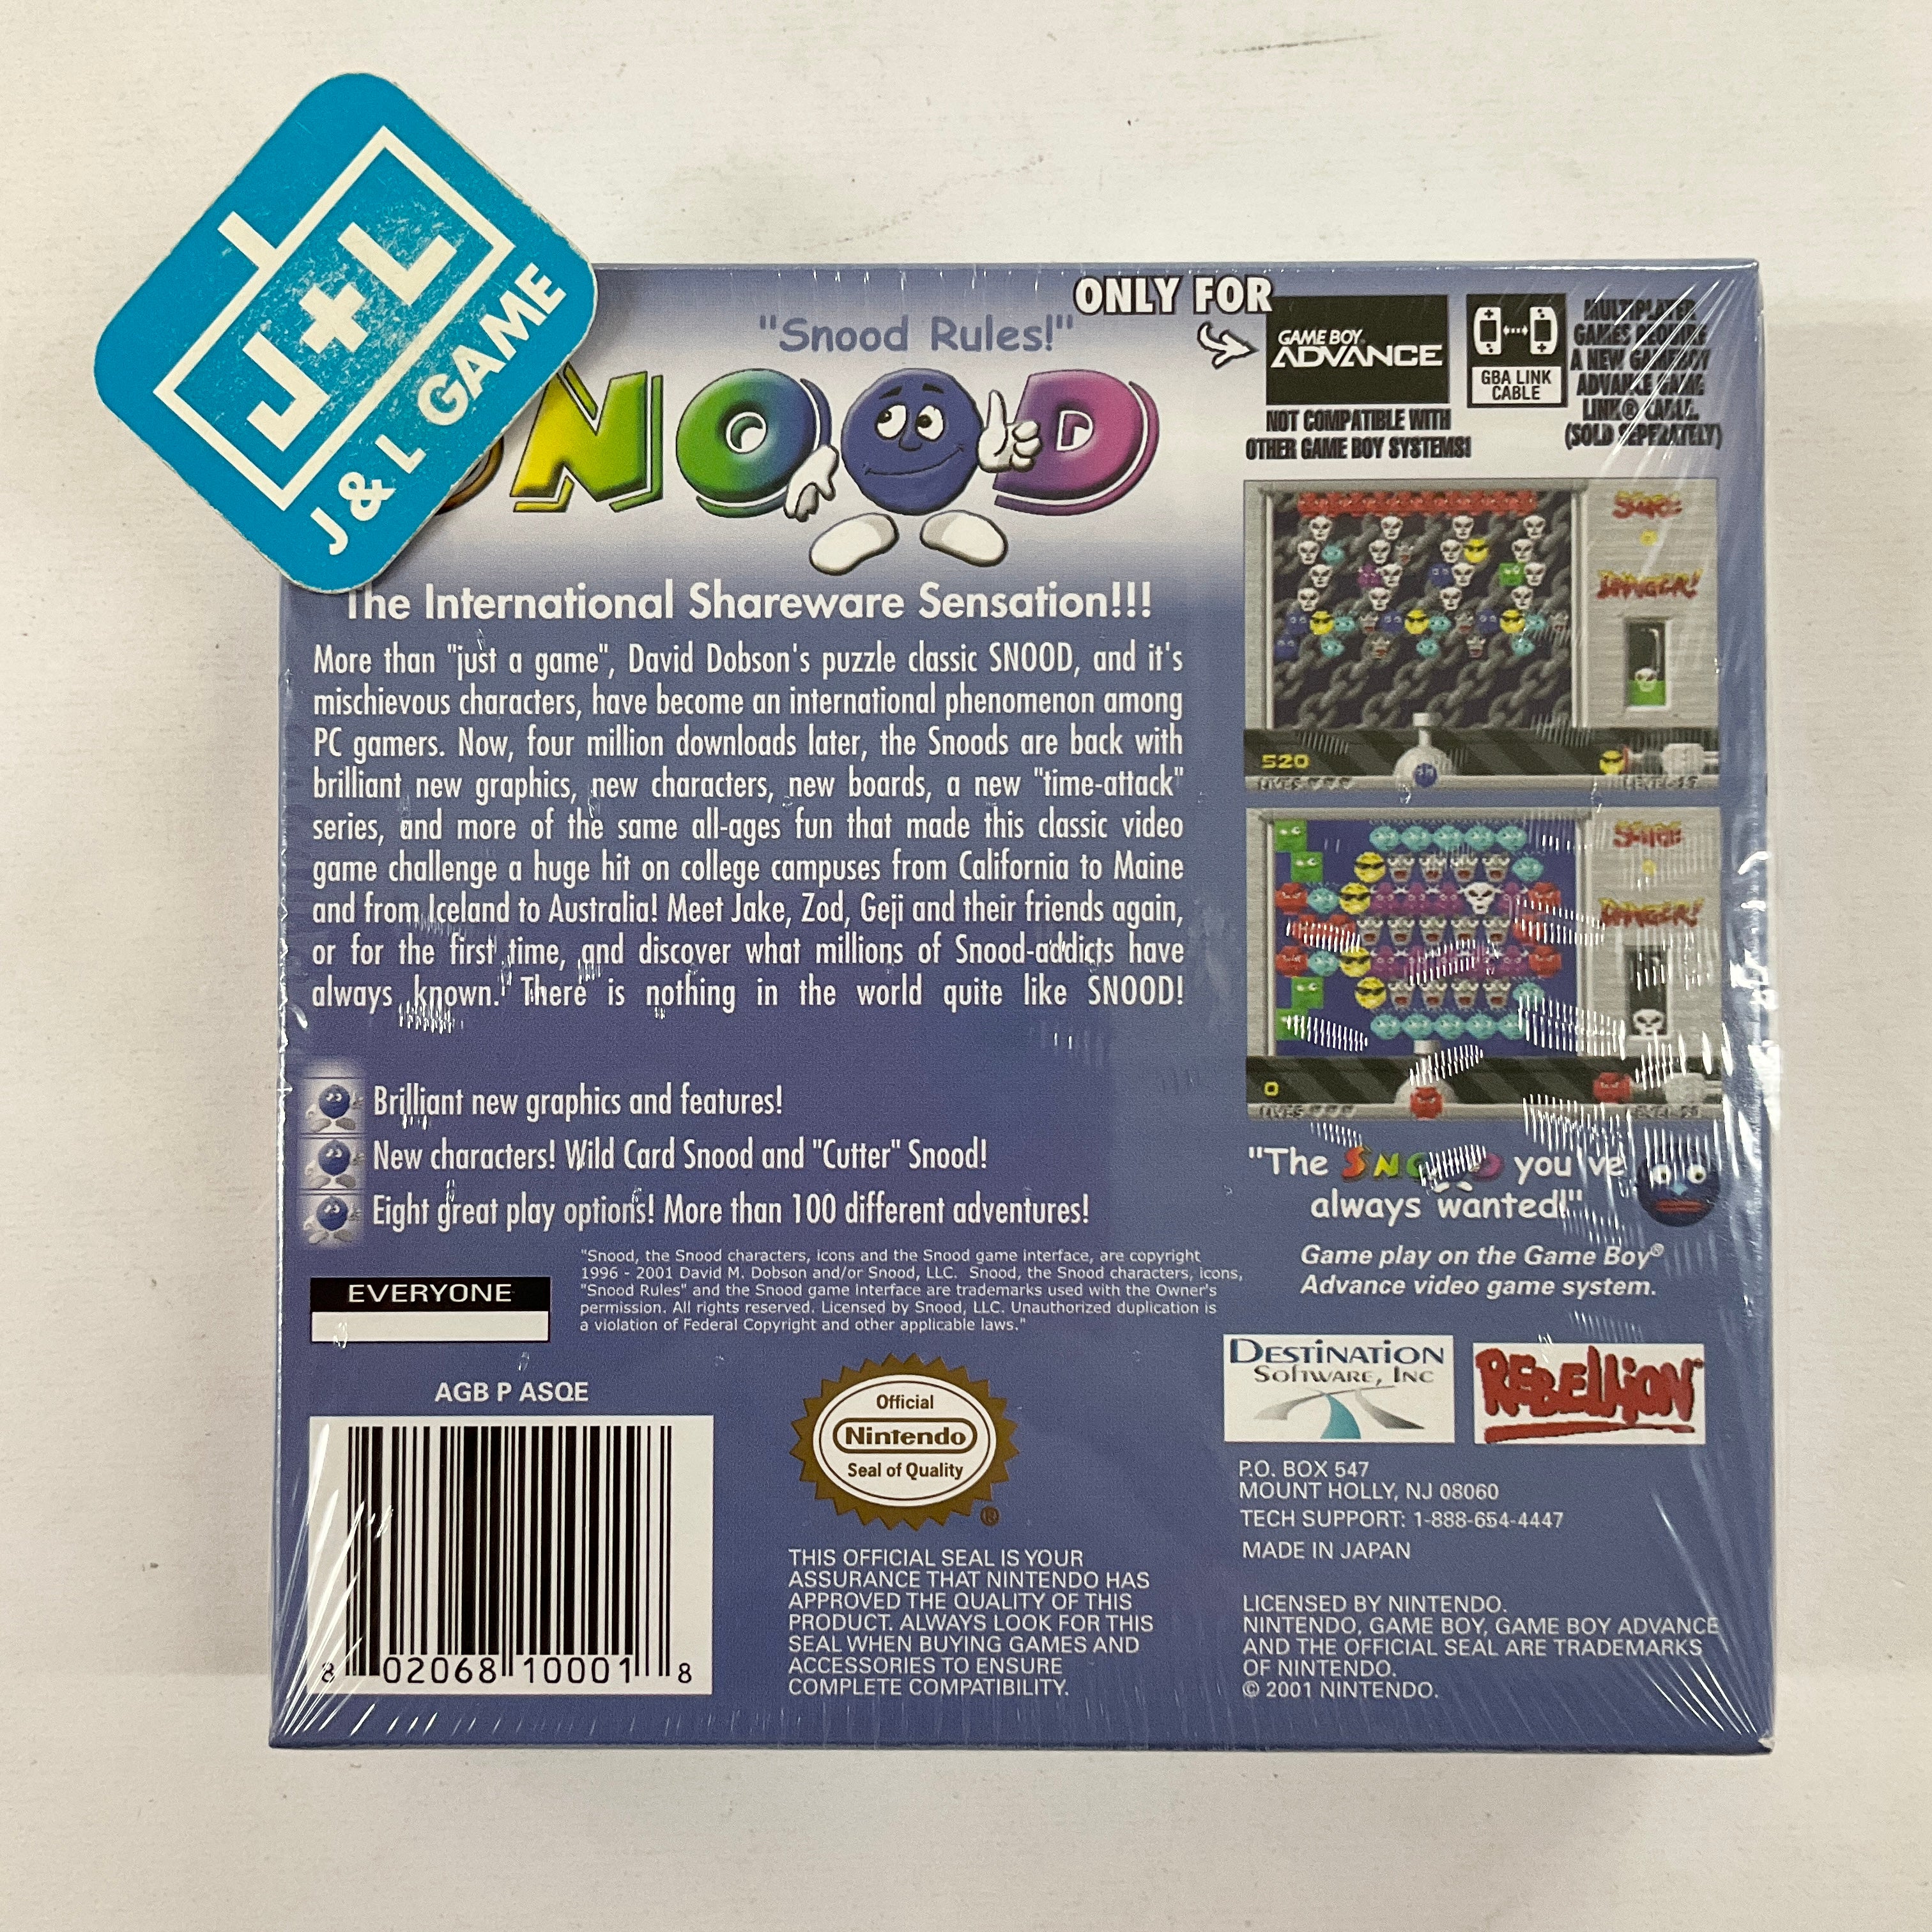 Snood - (GBA) Game Boy Advance Video Games Destination Software   